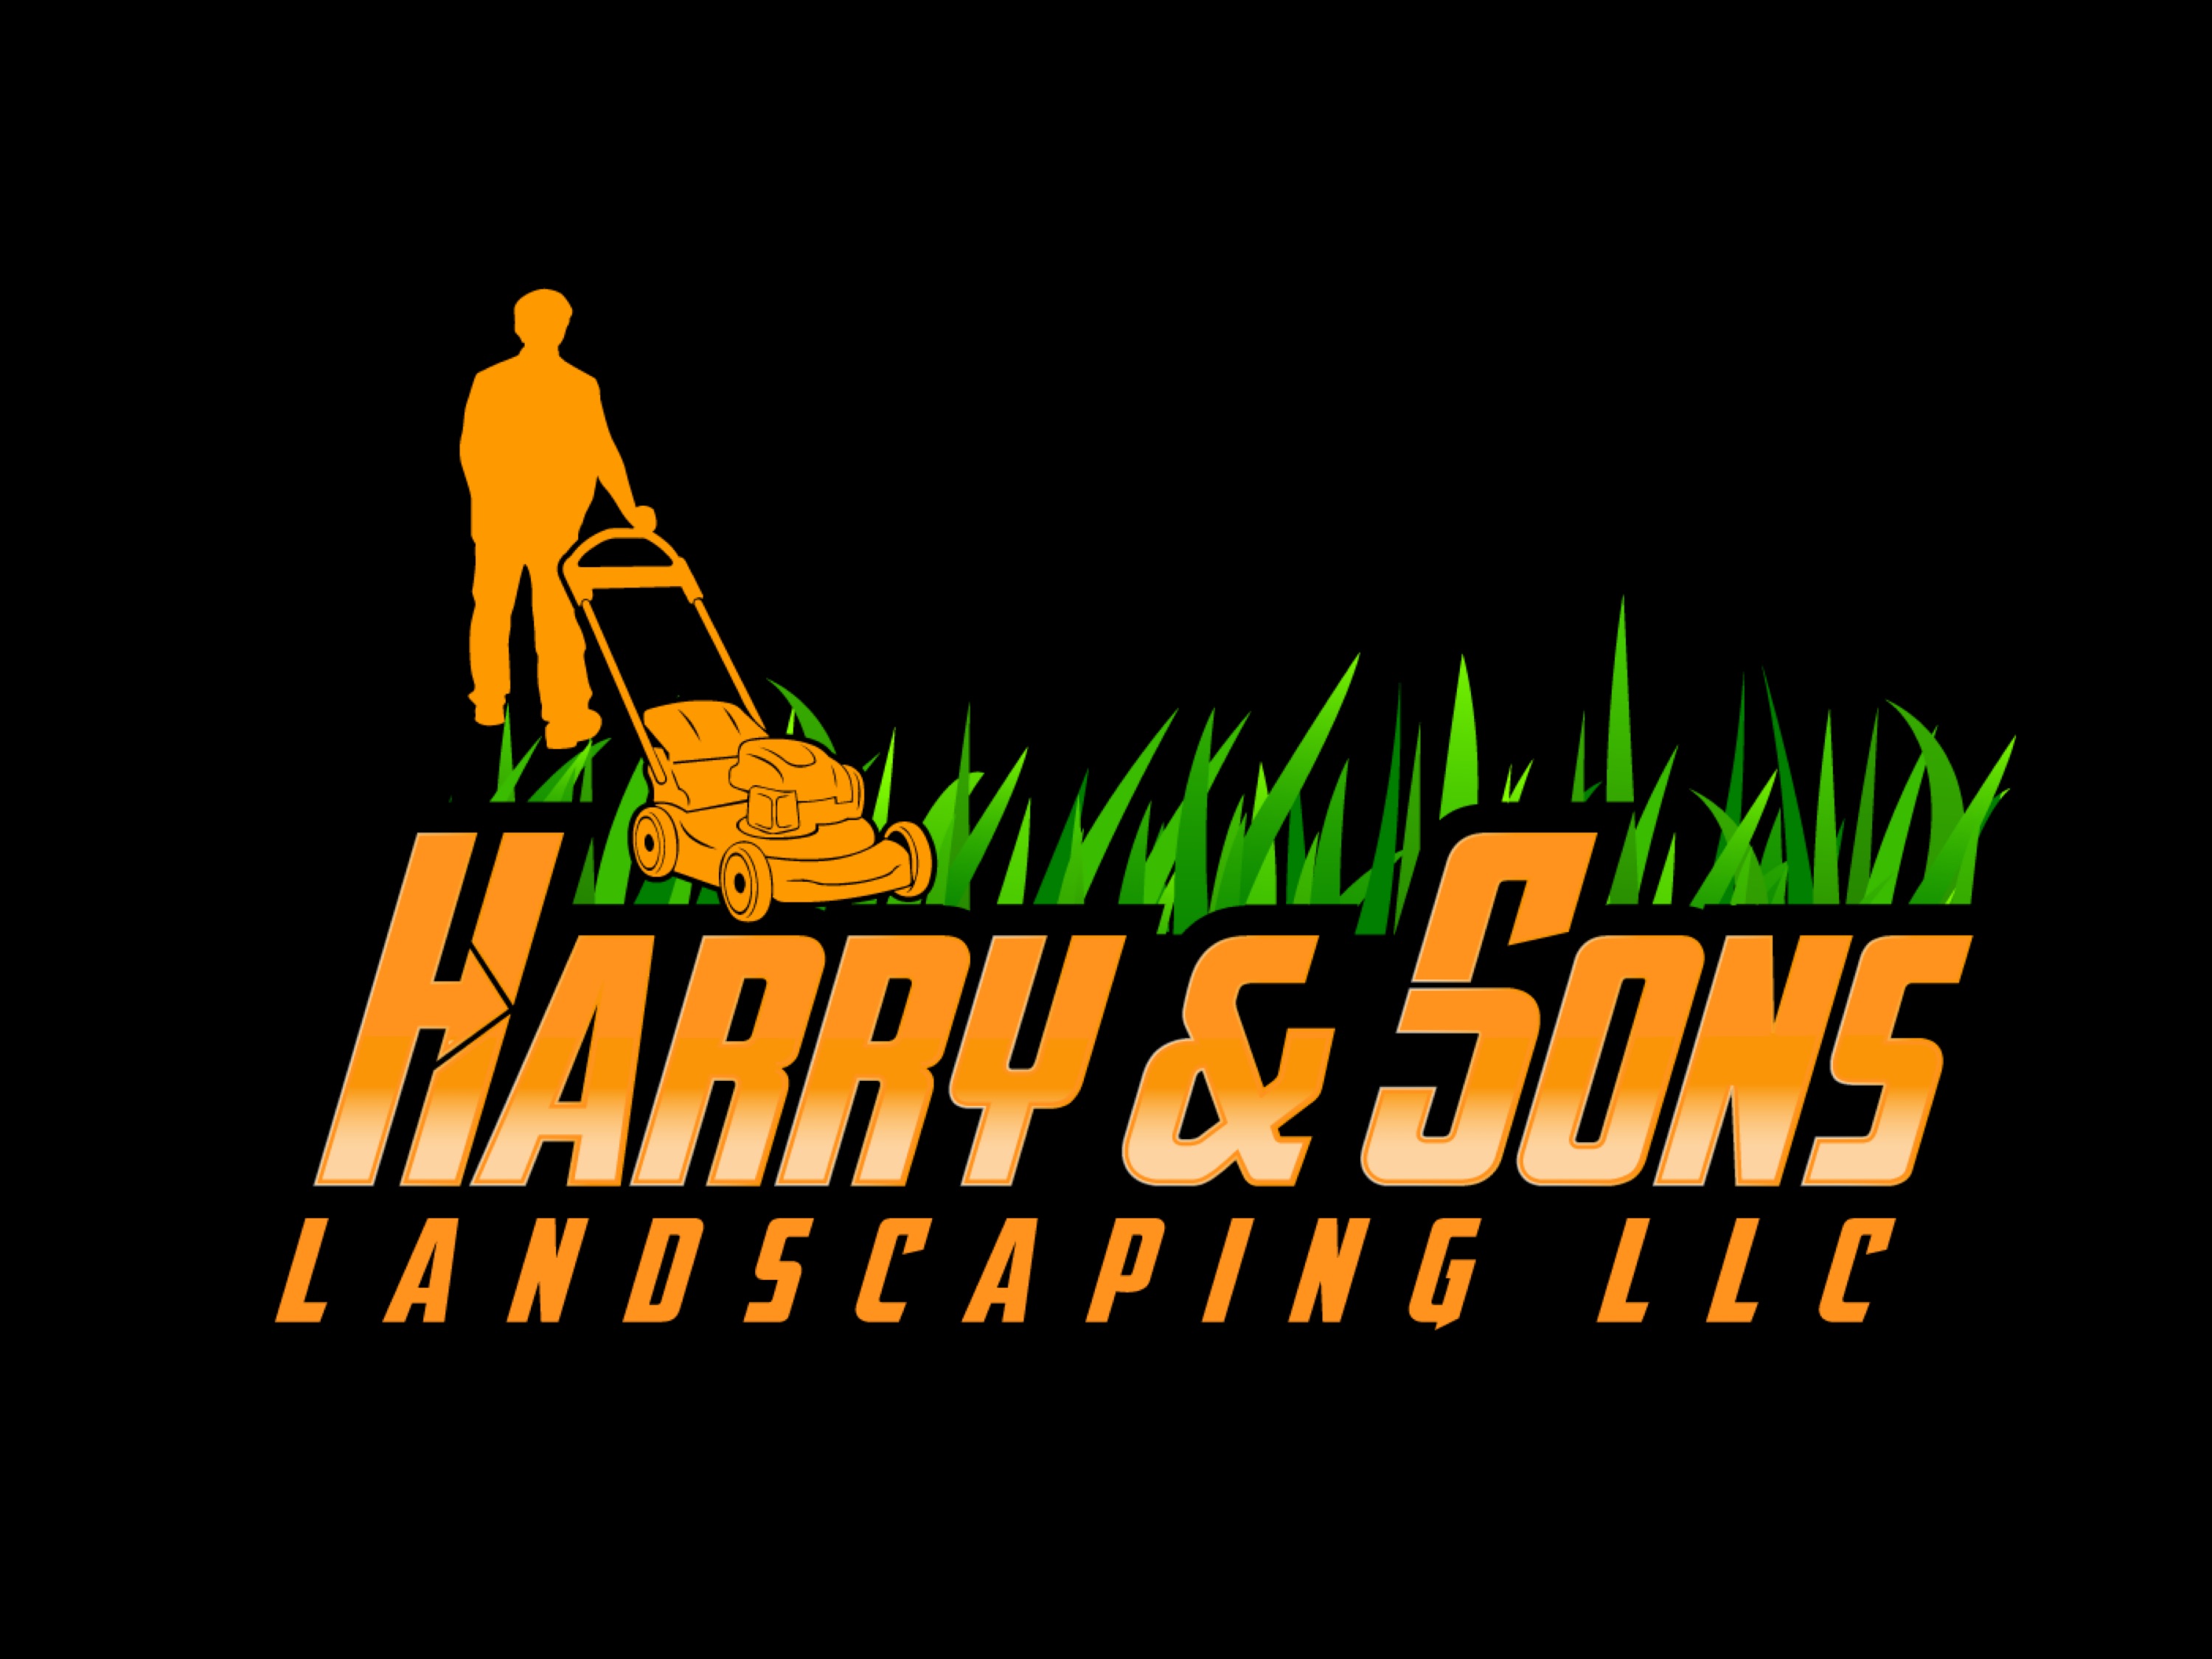 Harry & Son's Landscaping, LLC Logo